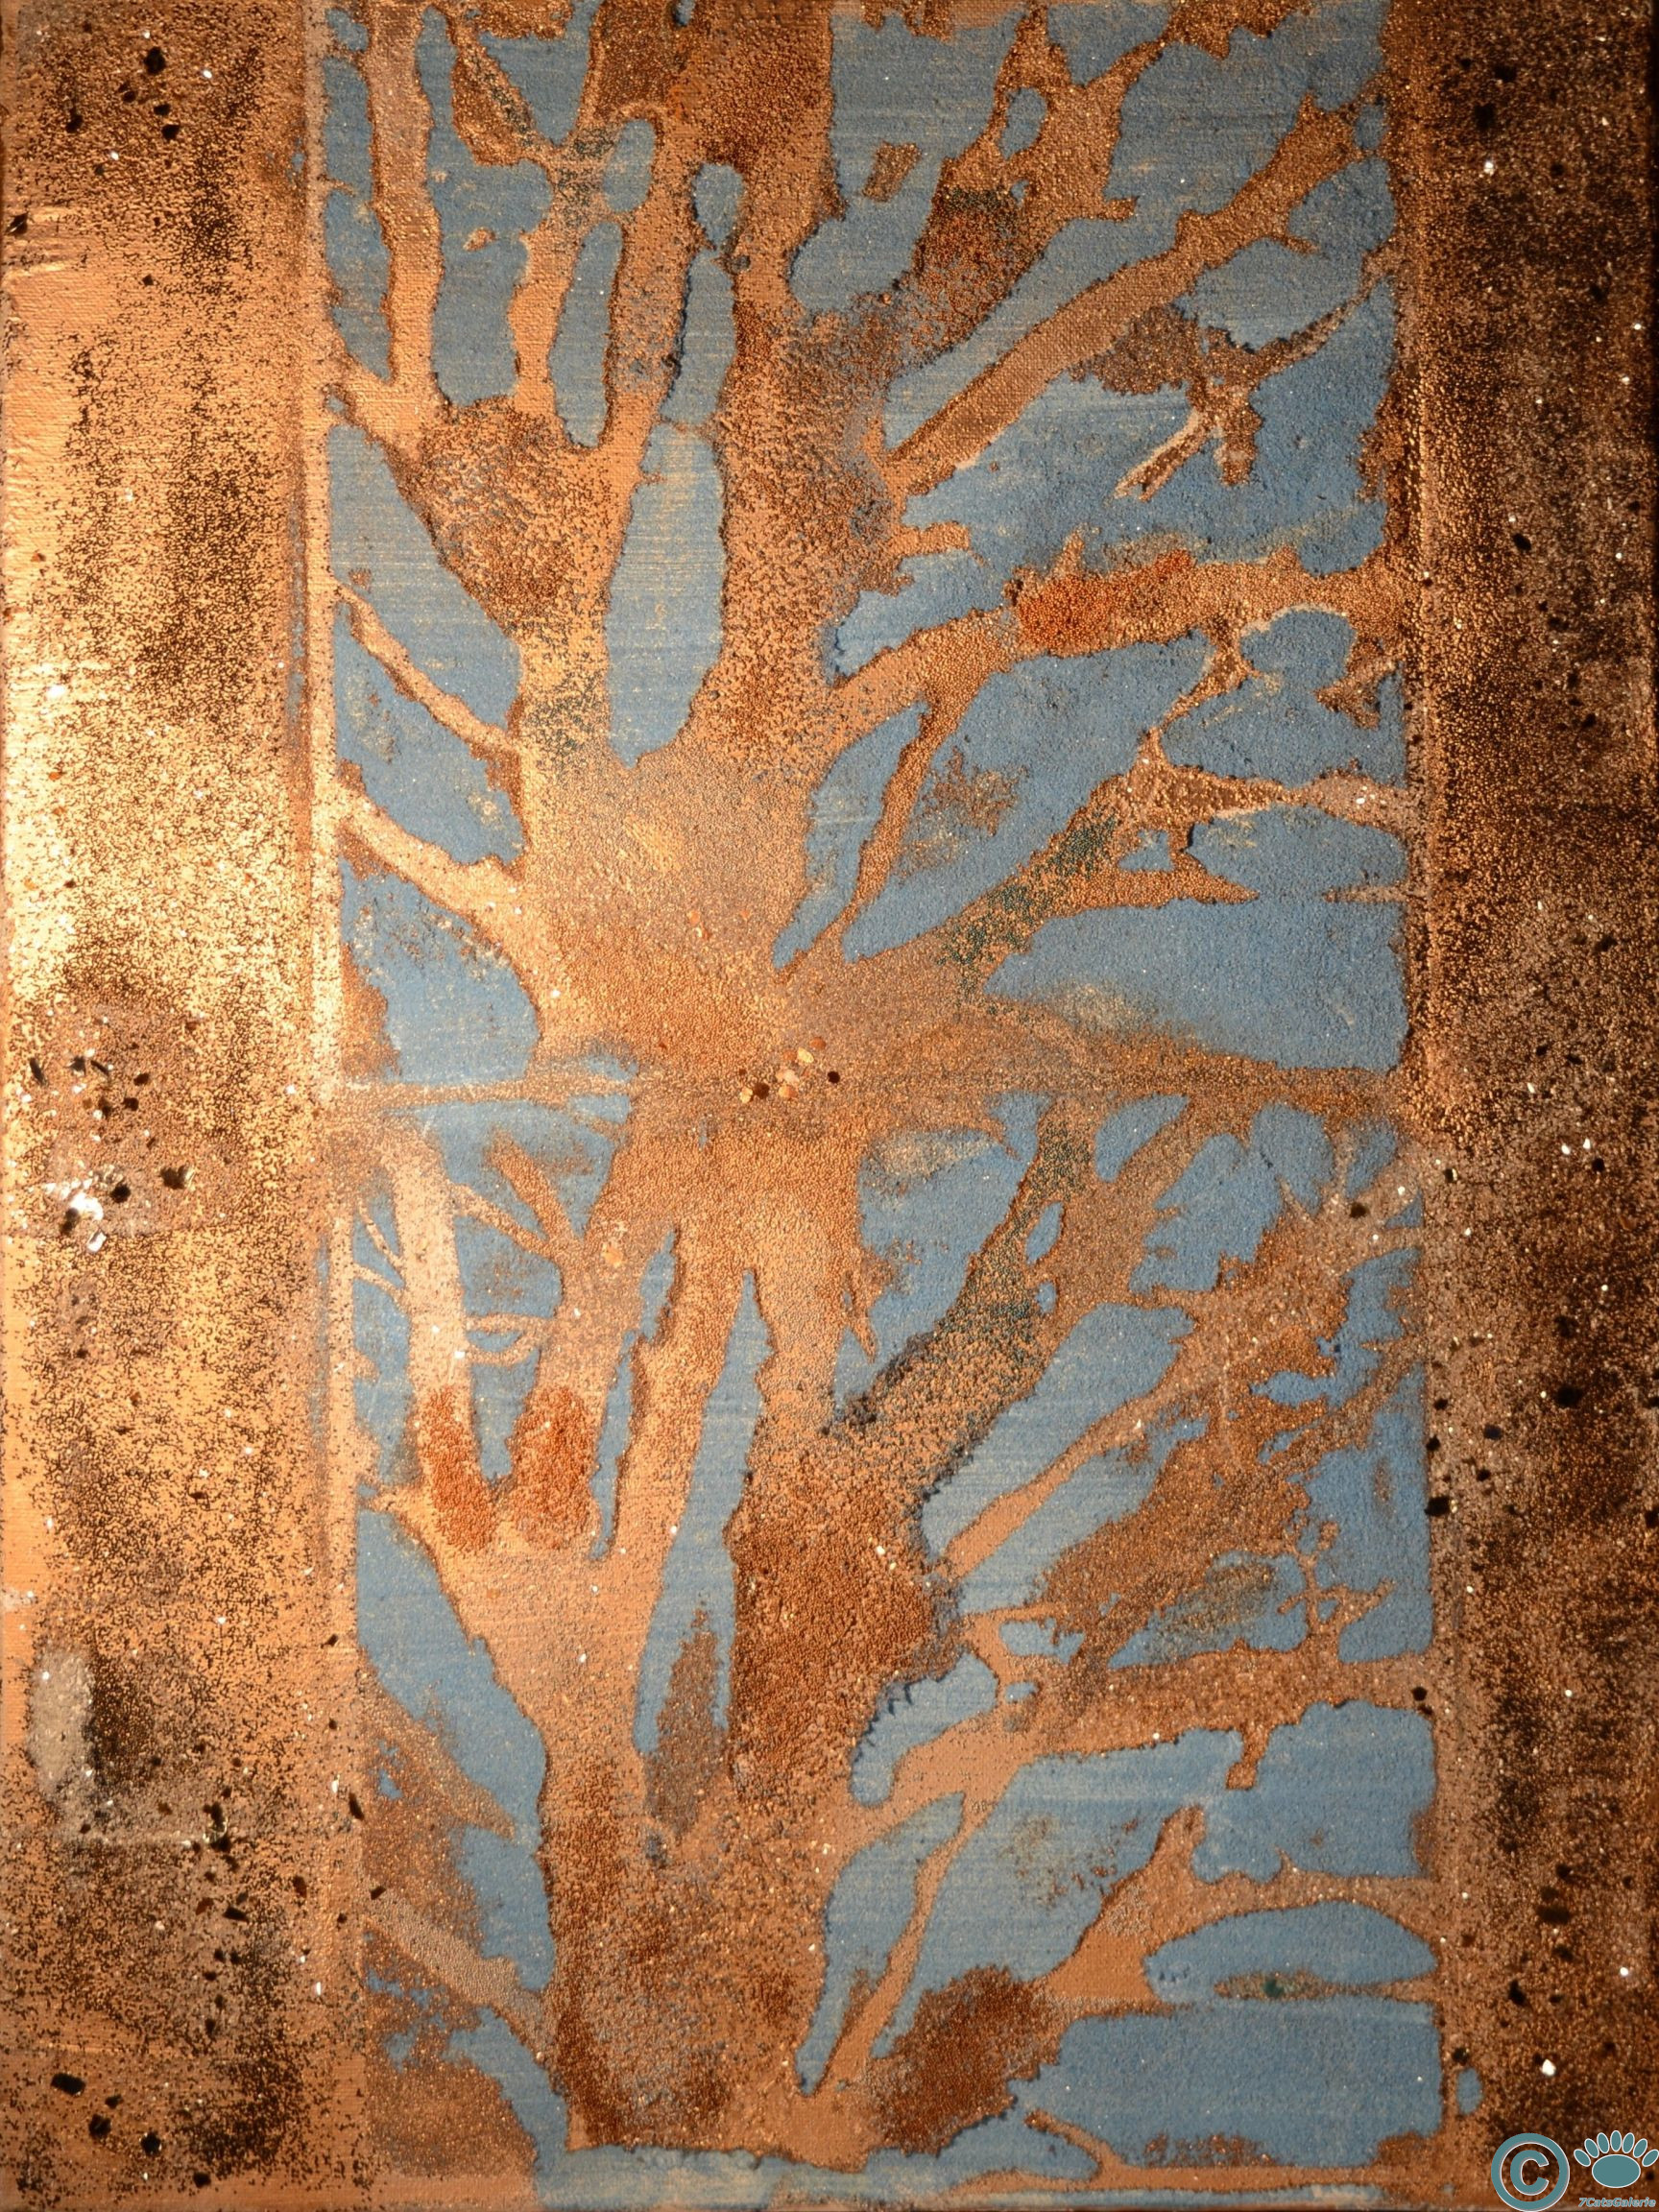 Copper Trees (18" x 24")